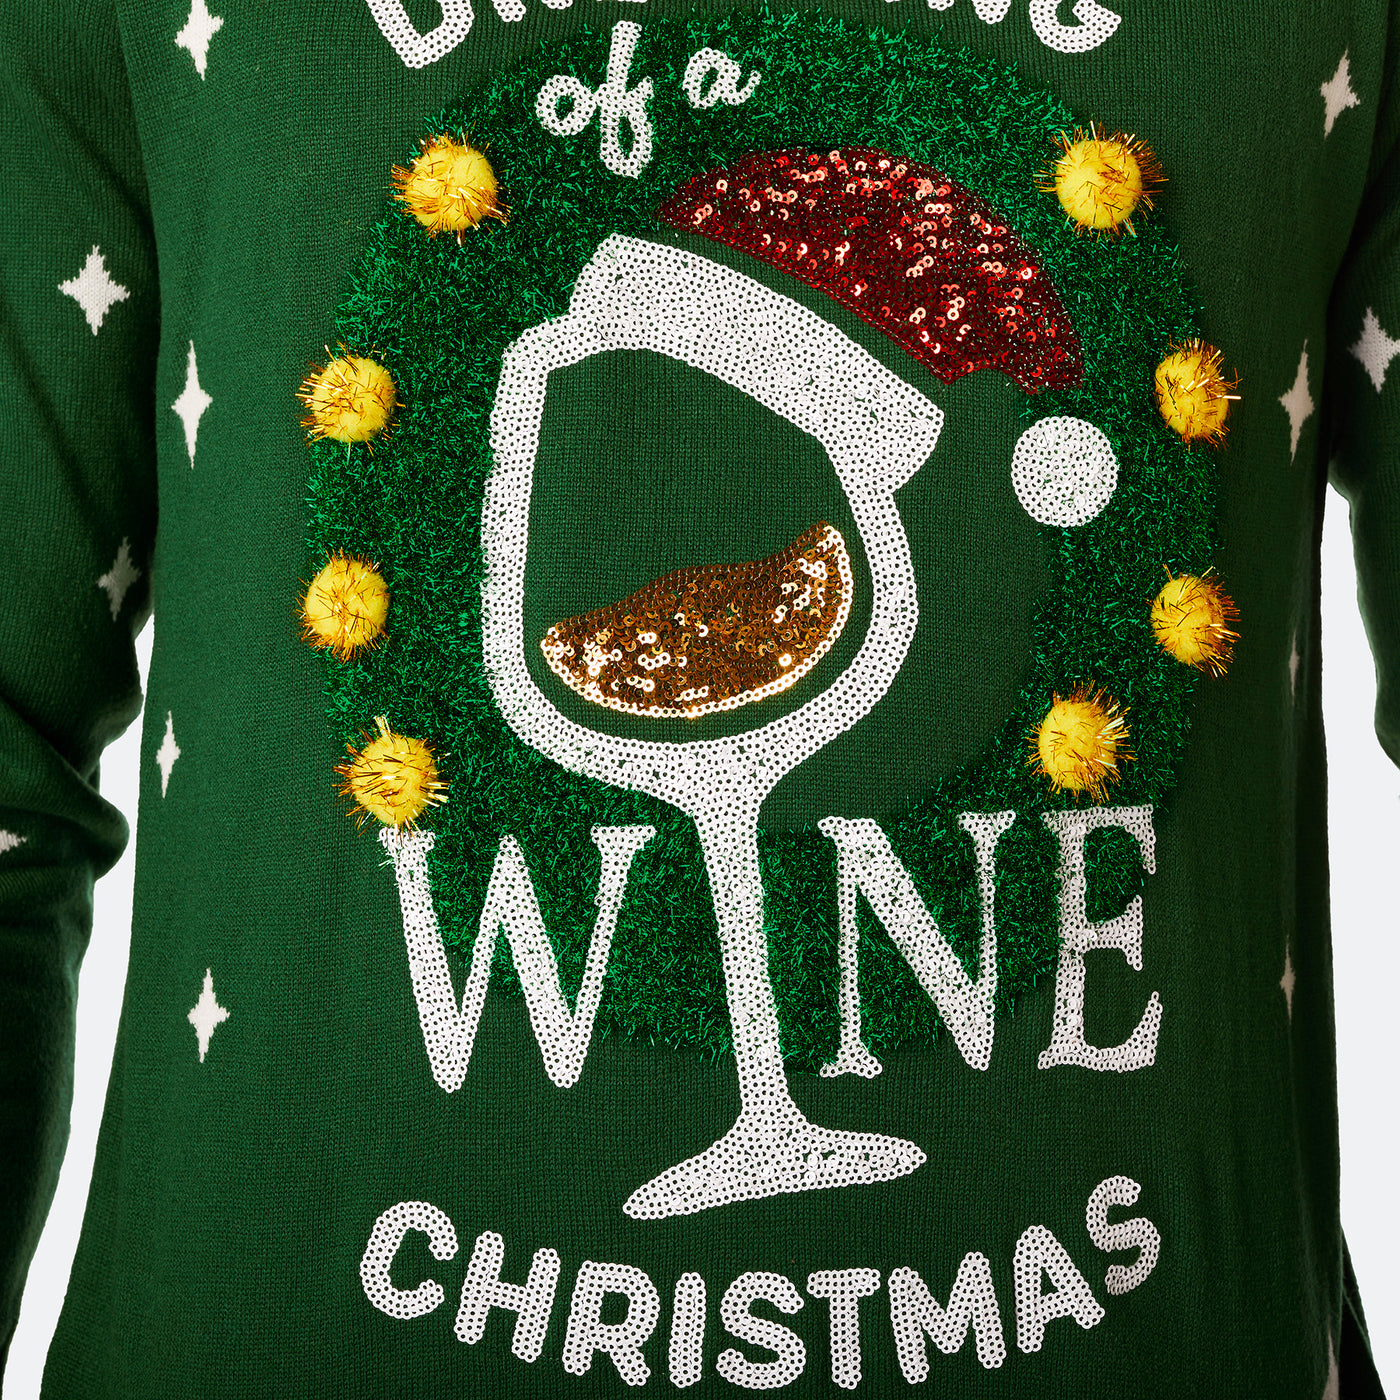 Men's Wine Christmas Sweater